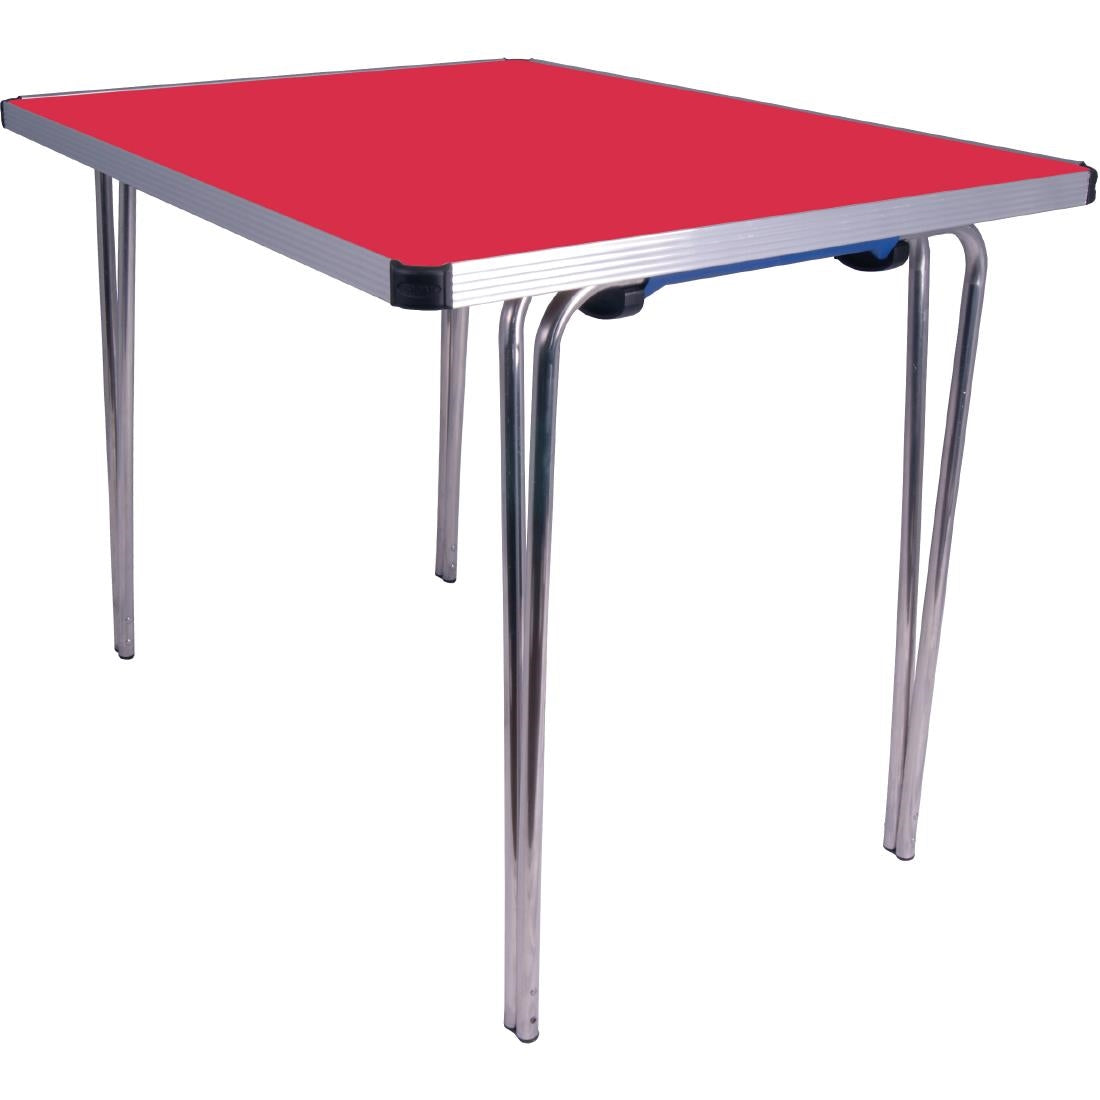 DM698 Gopak Contour Folding Table Red 3ft JD Catering Equipment Solutions Ltd